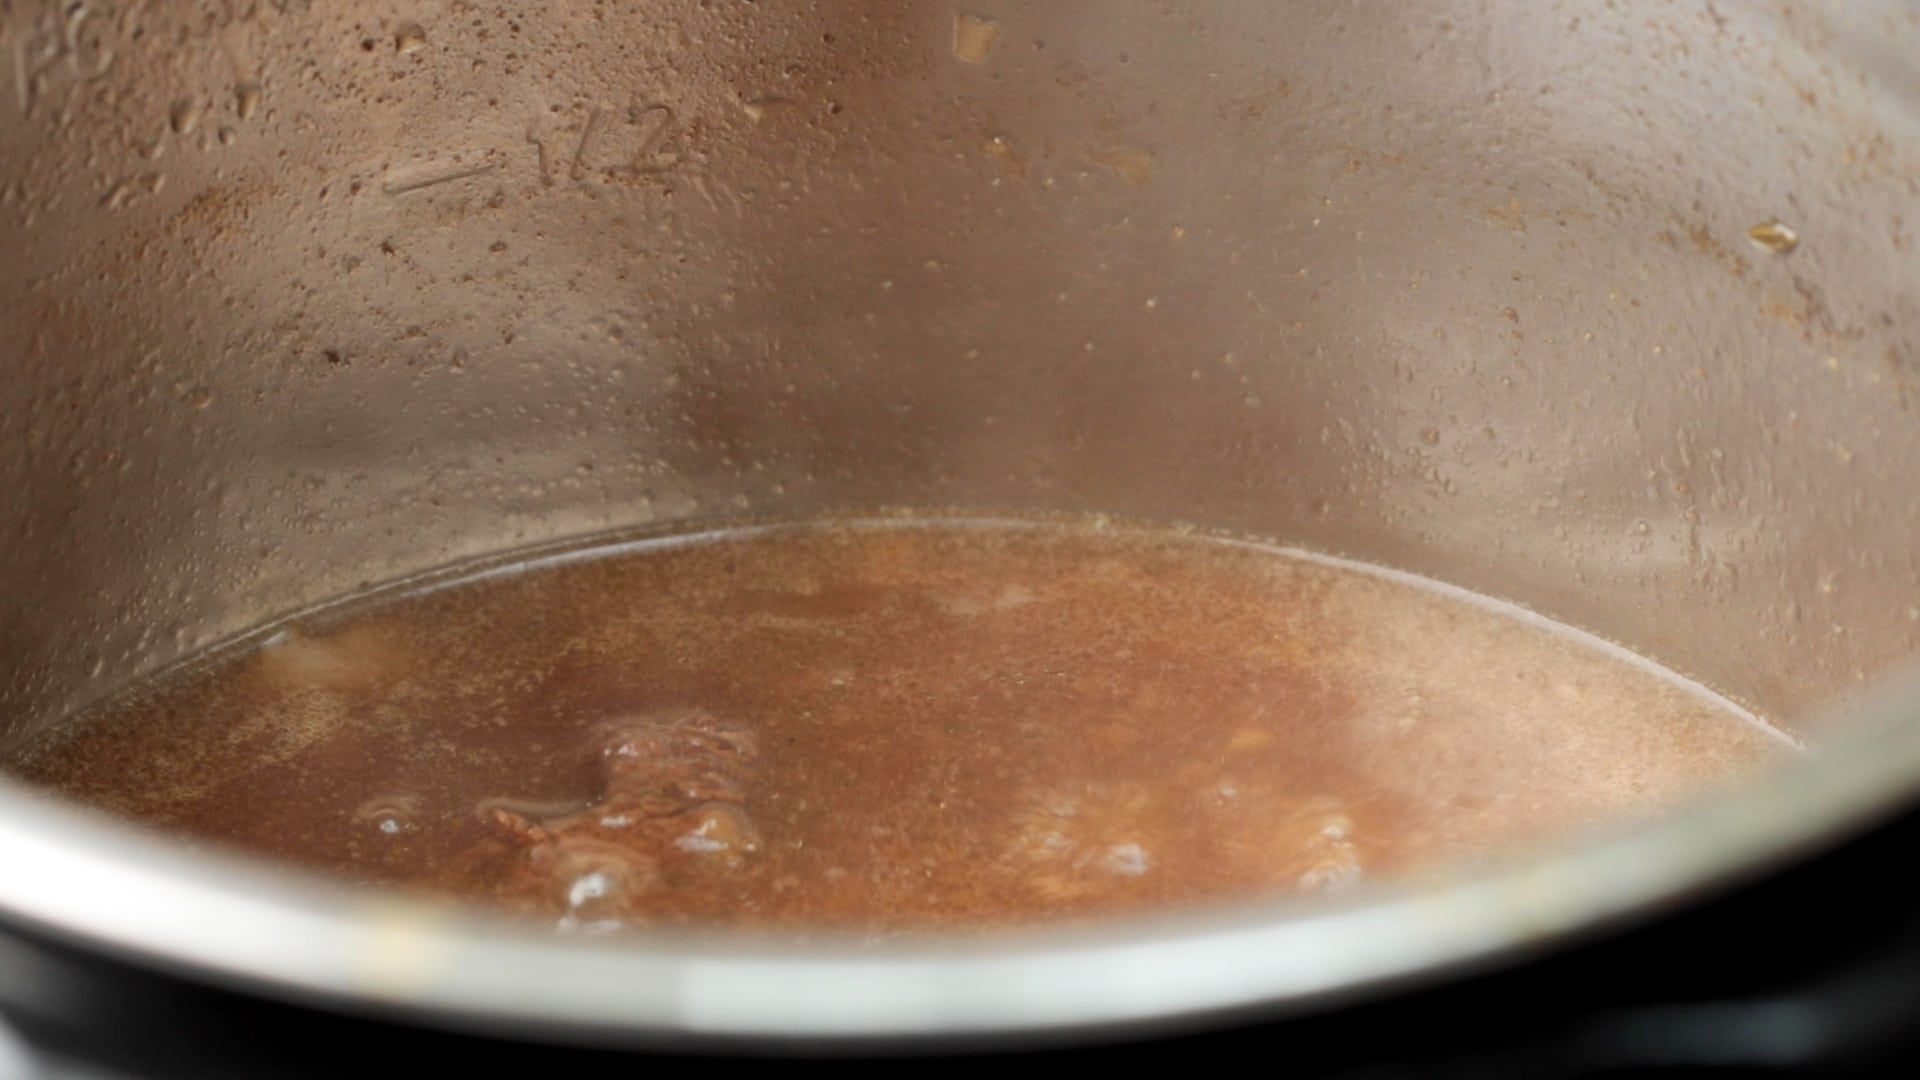 Instant pot pot roast step 11 - simmer gravy